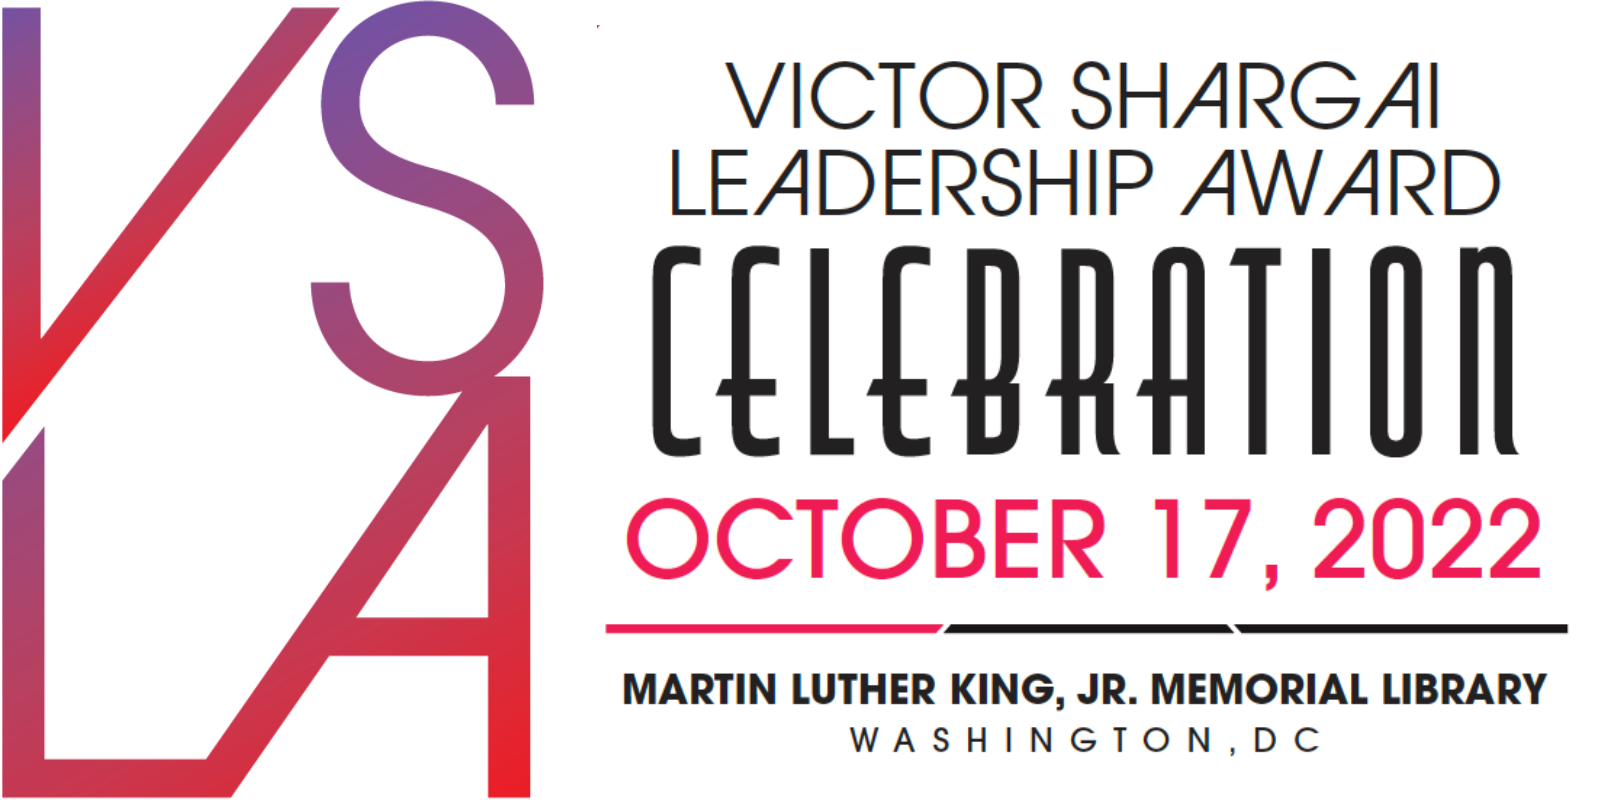 Victor Shargai Leadership Award Celebration October 17 2022 Martin Luther King Jr Memorial Library Washington DC